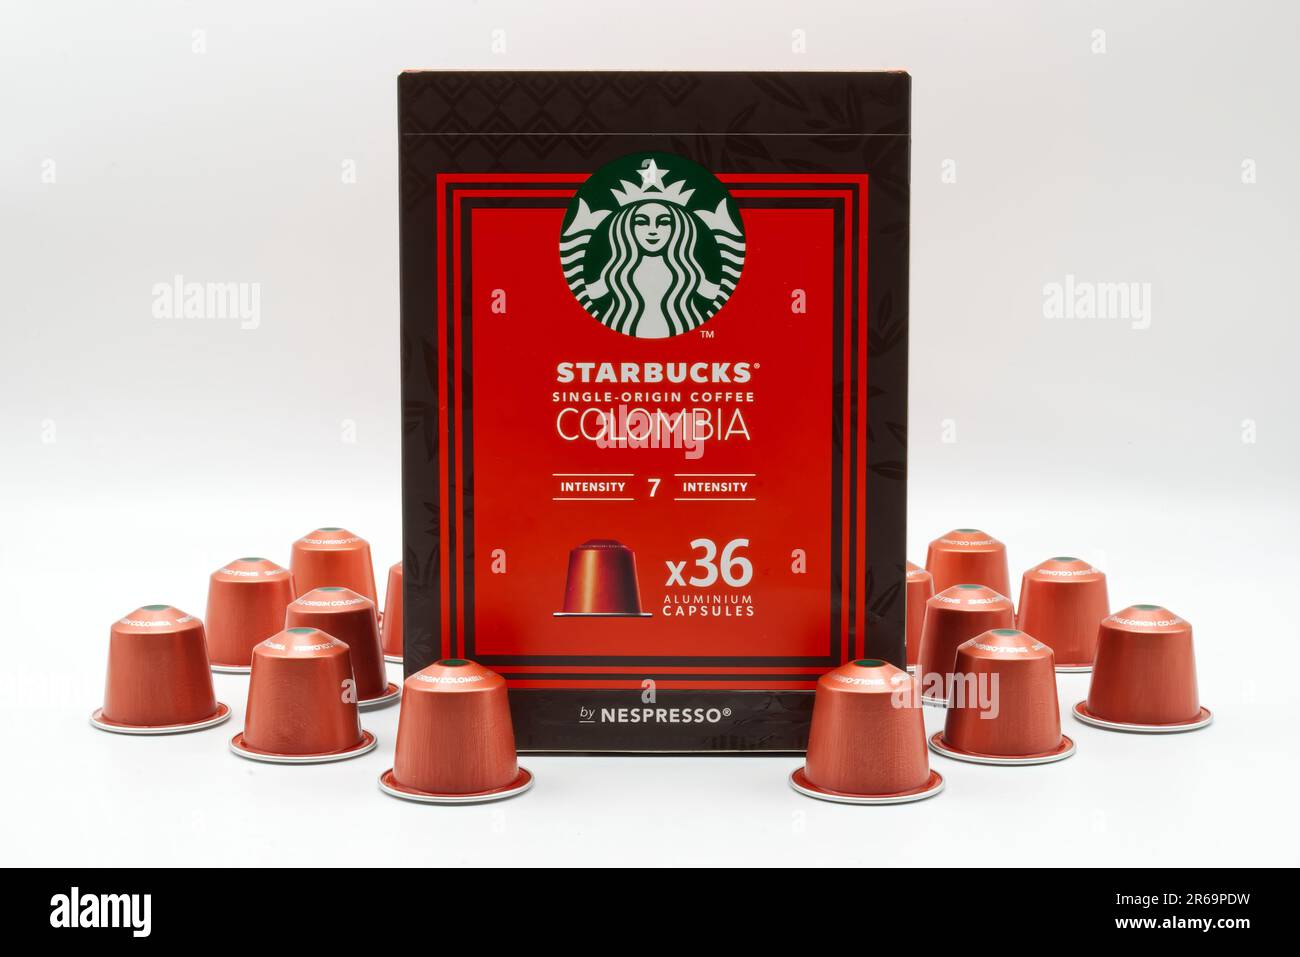 Starbucks single origin coffee Columbia by Nespresso Stock Photo - Alamy